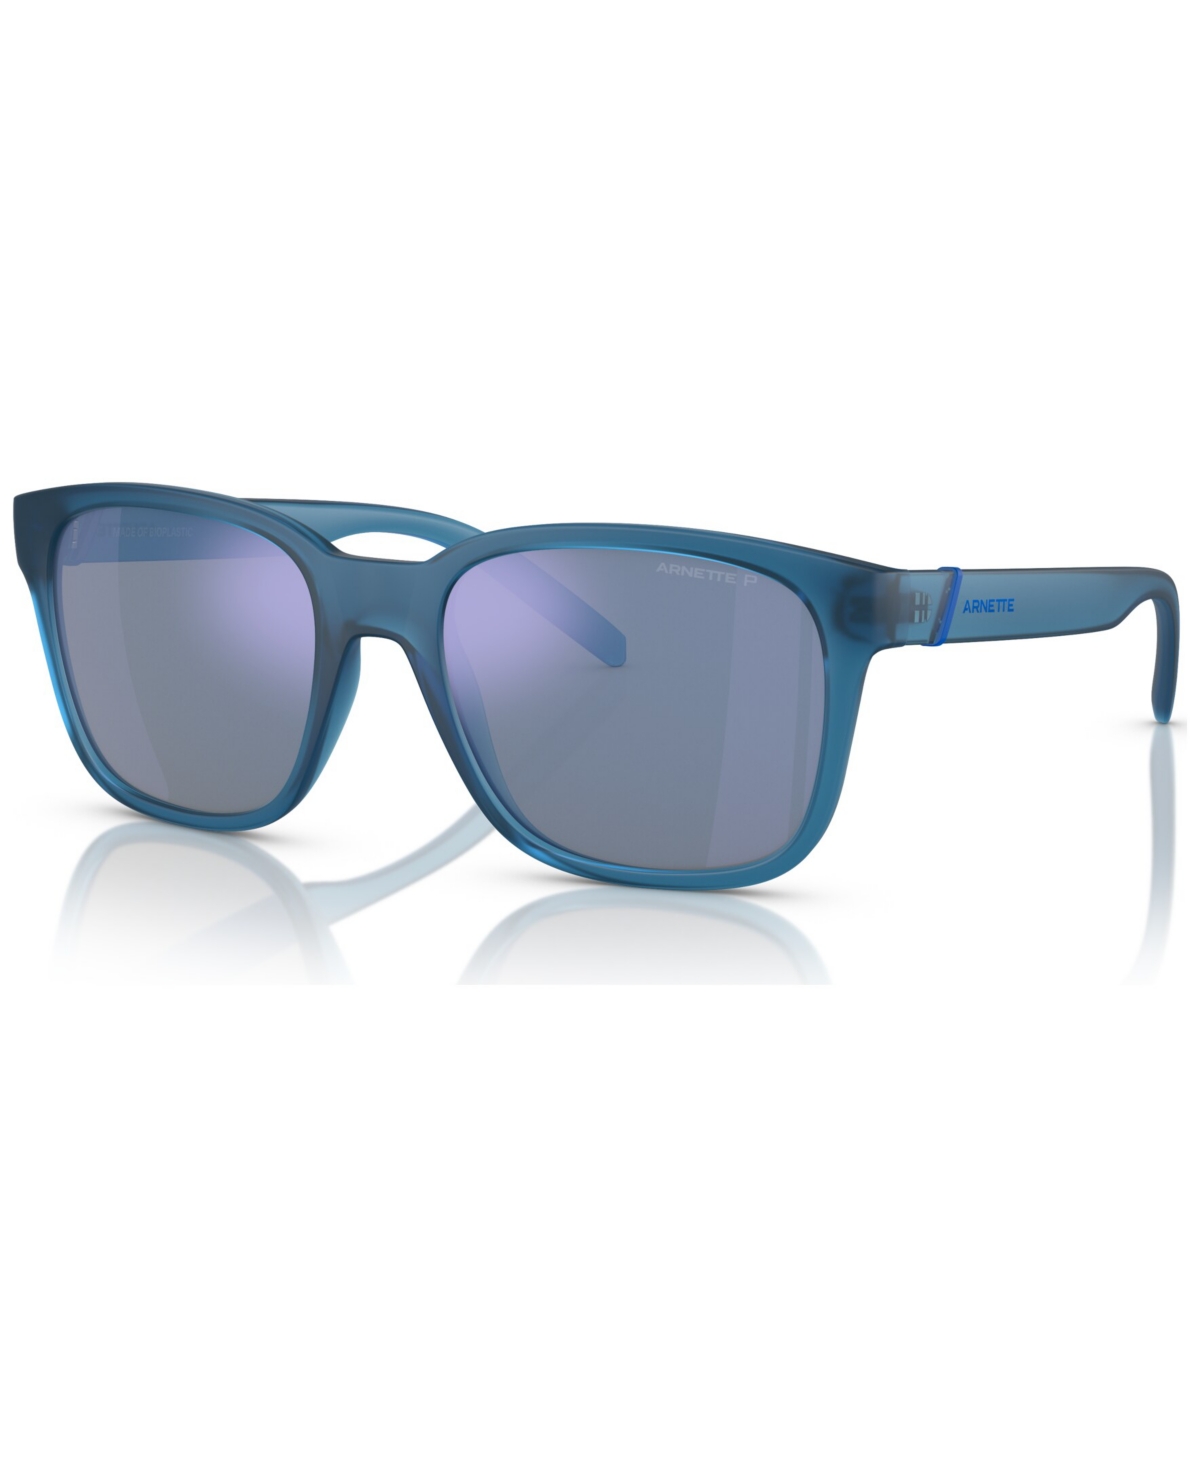 Arnette Men's Polarized Sunglasses, Surry H